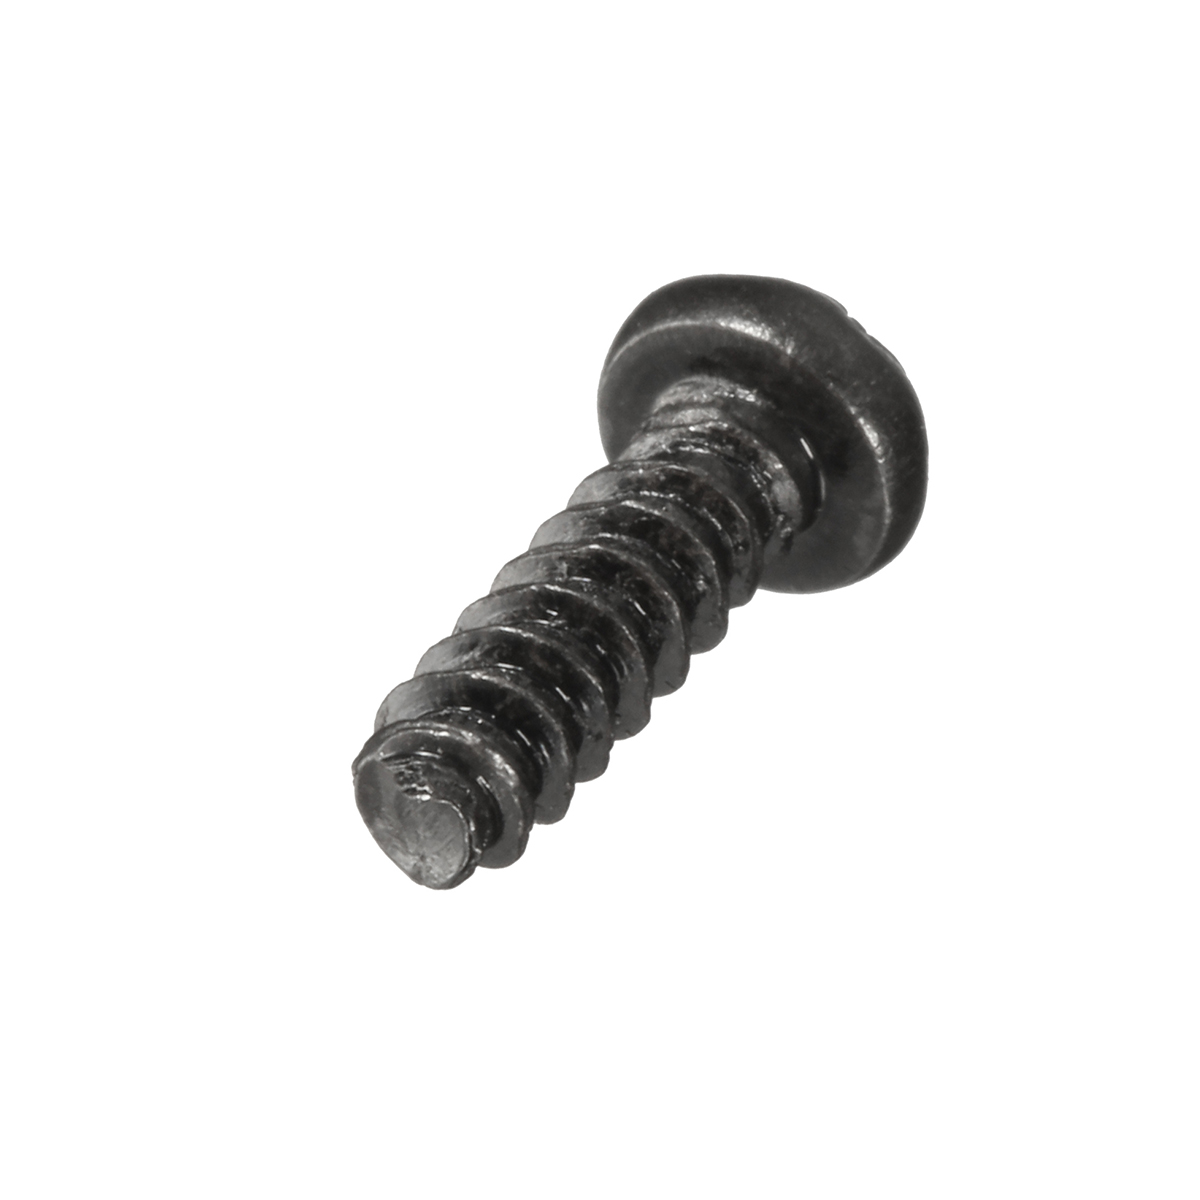 Screw-Replacement-Black-Steel-Repair-Part-For-Xbox-360-Controller-1121732